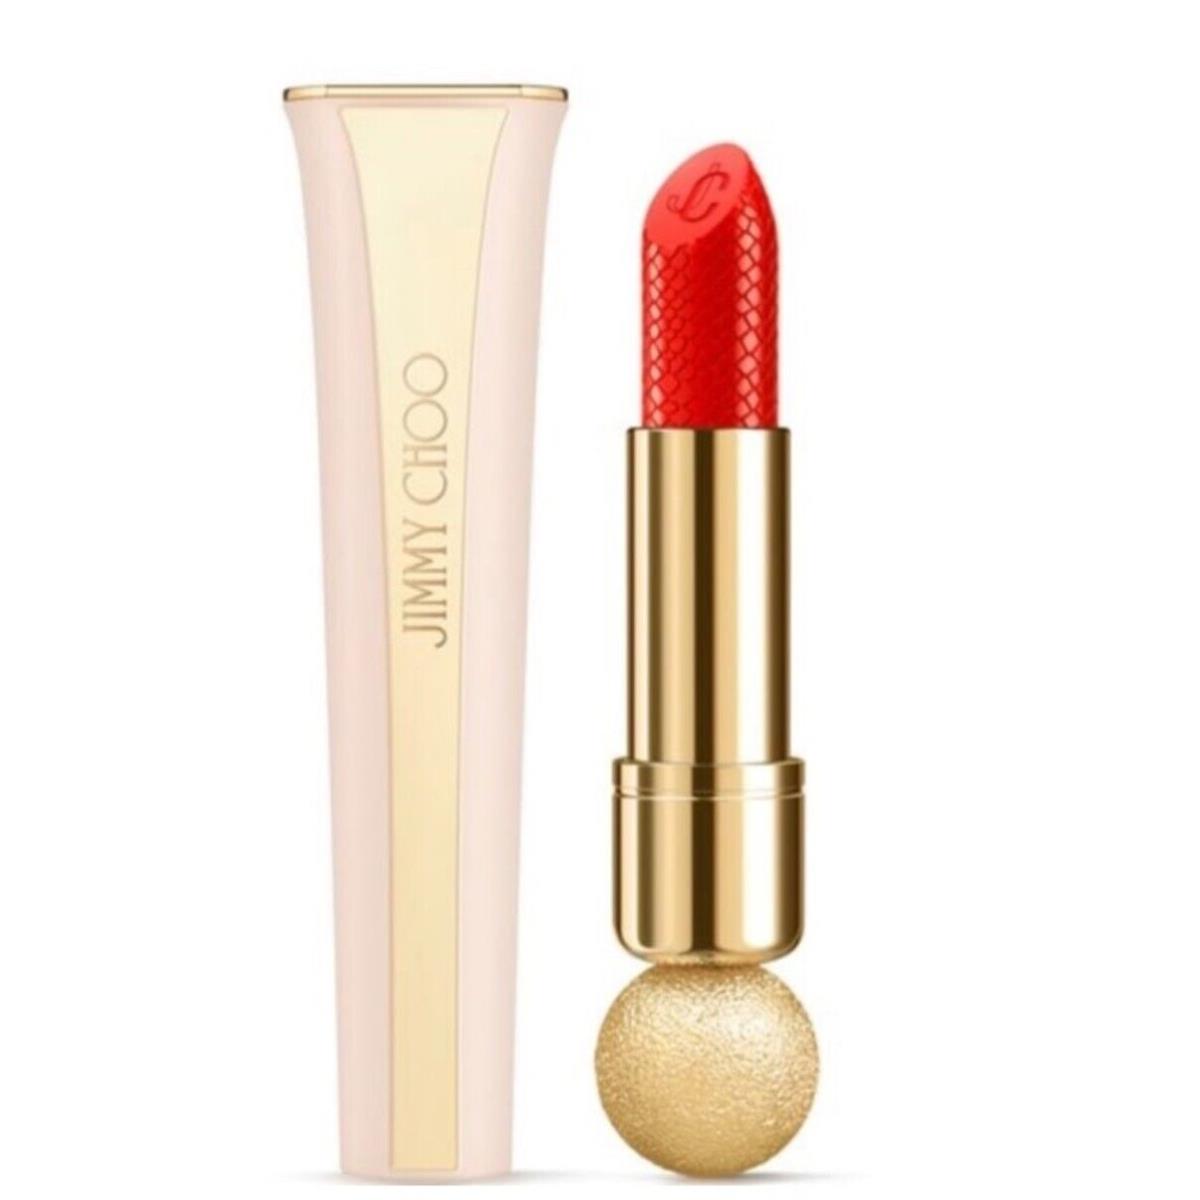 Jimmy Choo Seduction Collection Satin Lip Color Lipstick 004 Coral Kiss